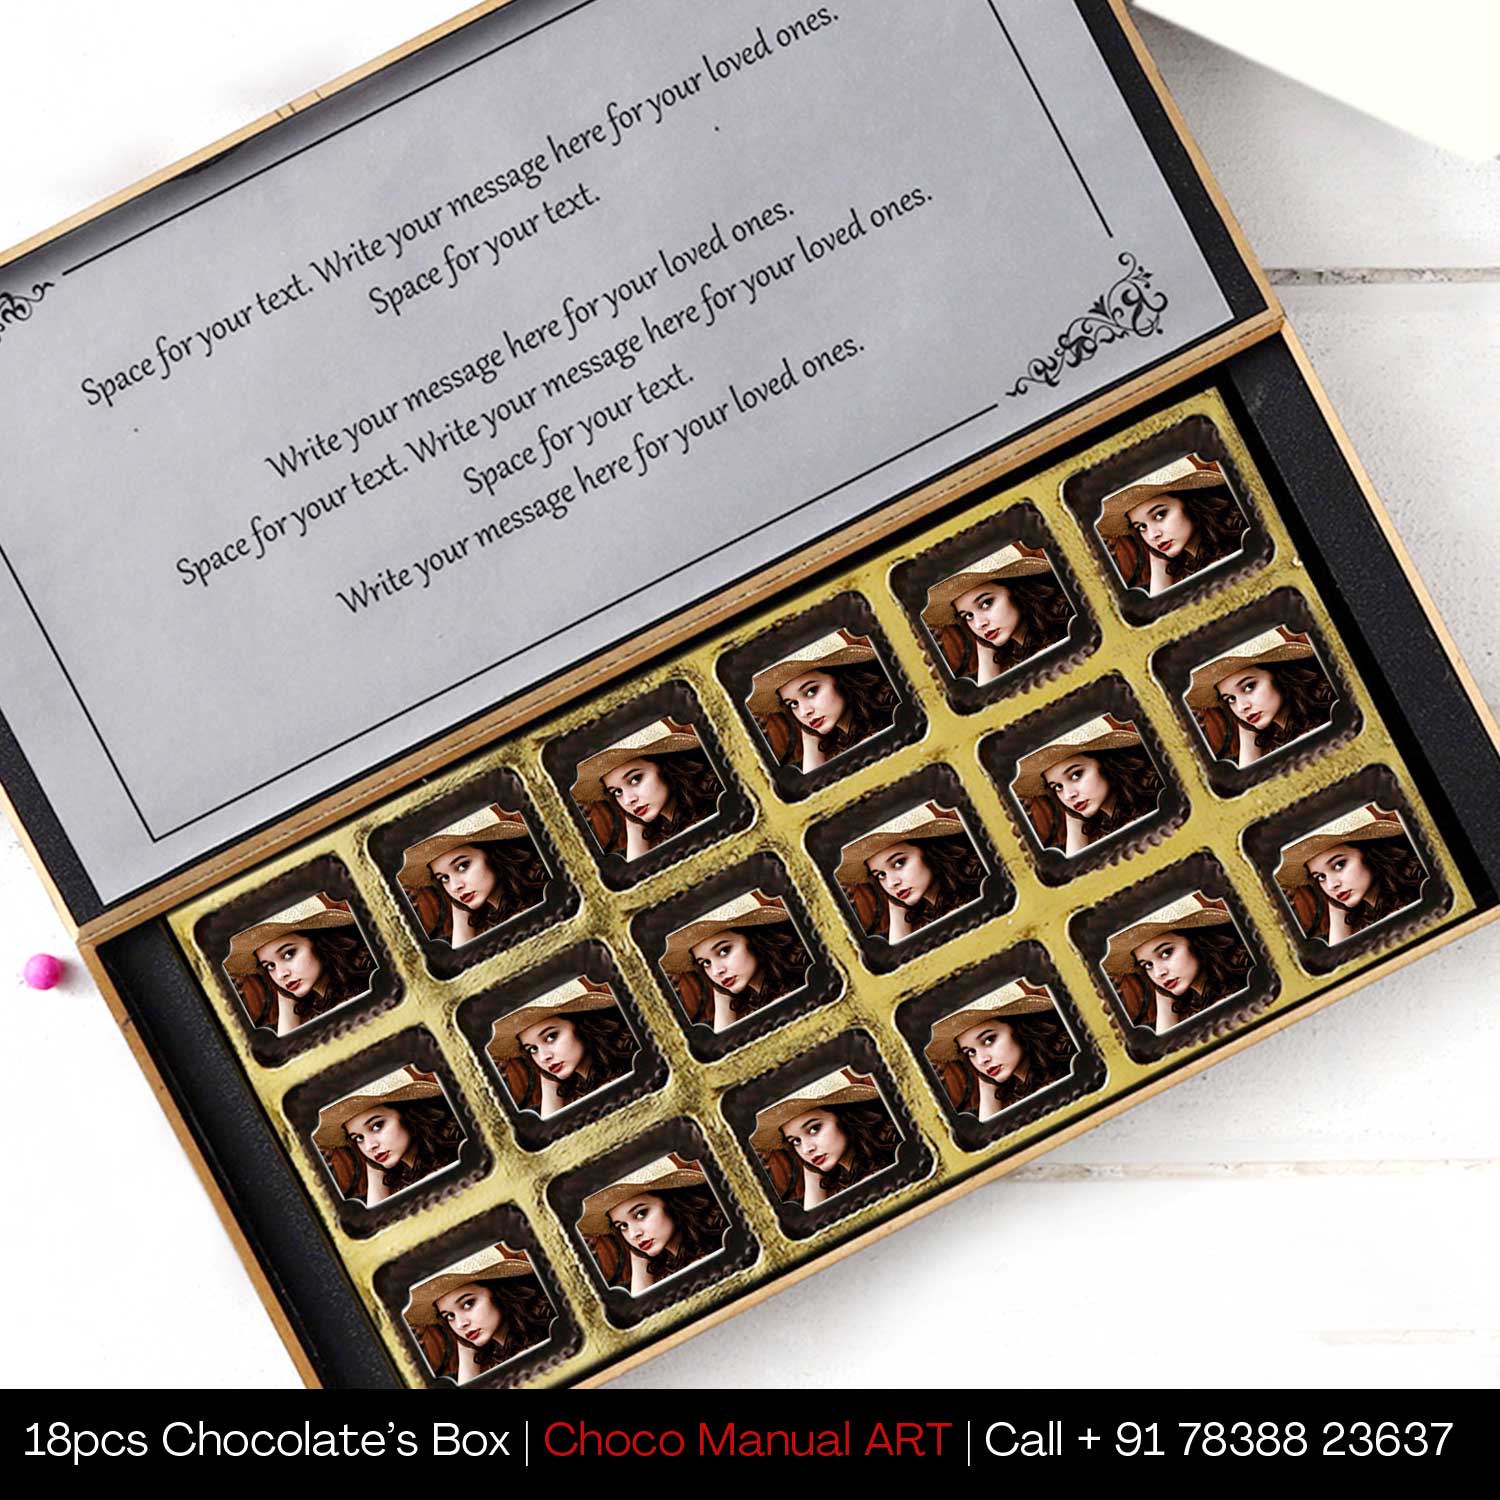 I Miss You Personalised Chocolate Online - Choco ManualART